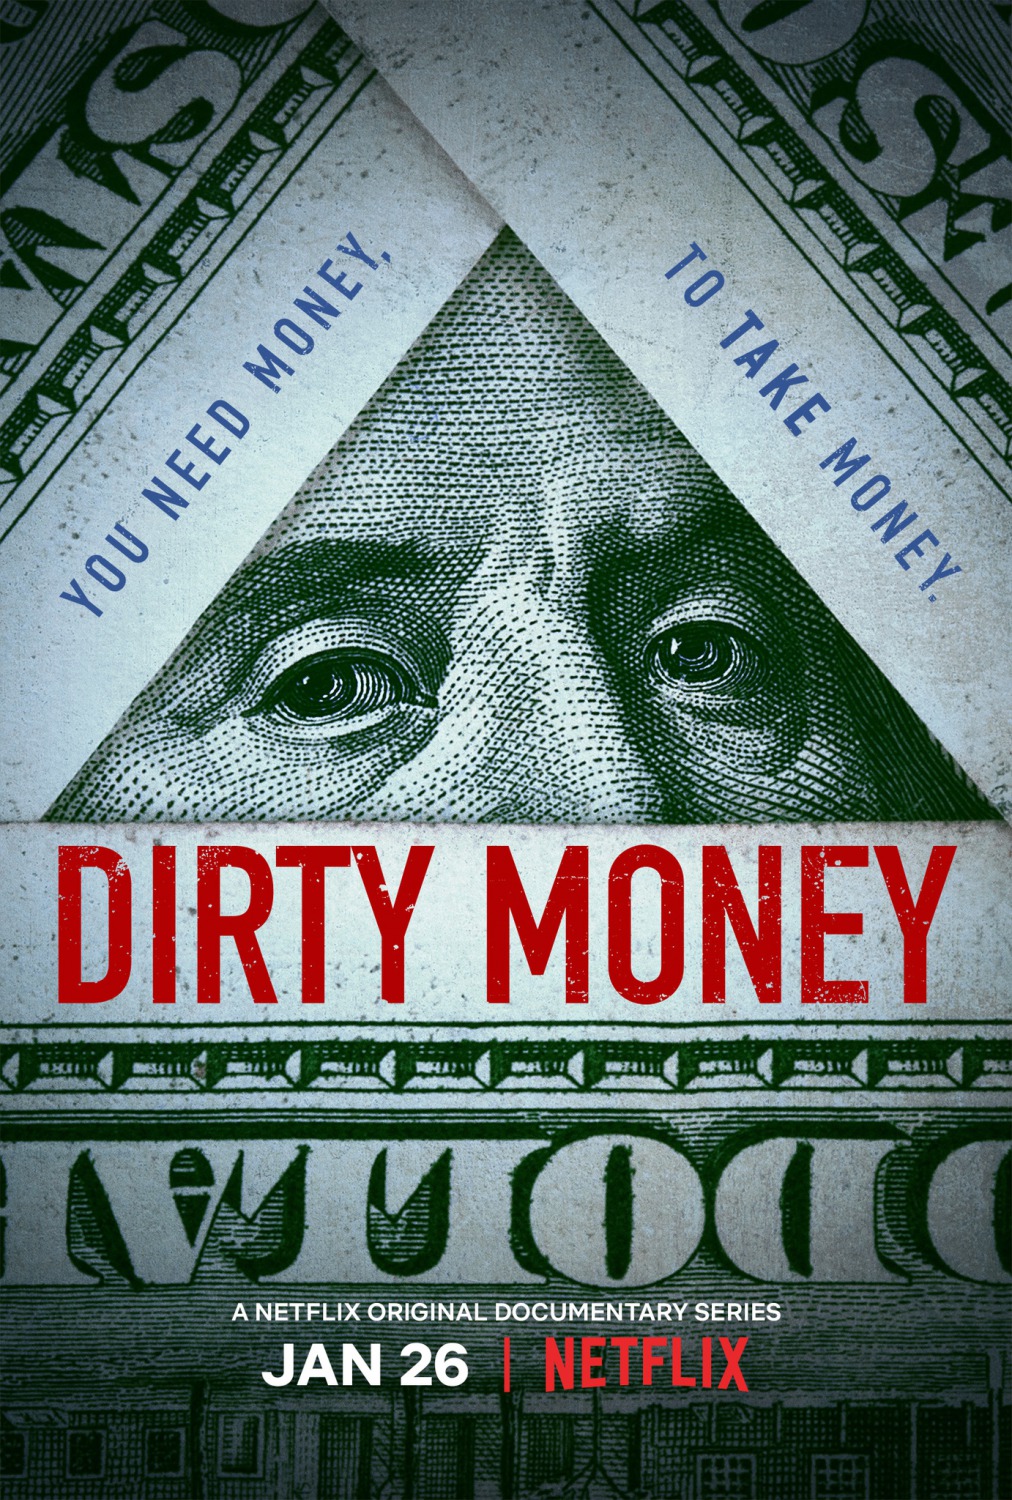 Dirty Money (#1 of 4): Extra Large Movie Poster Image - IMP Awards